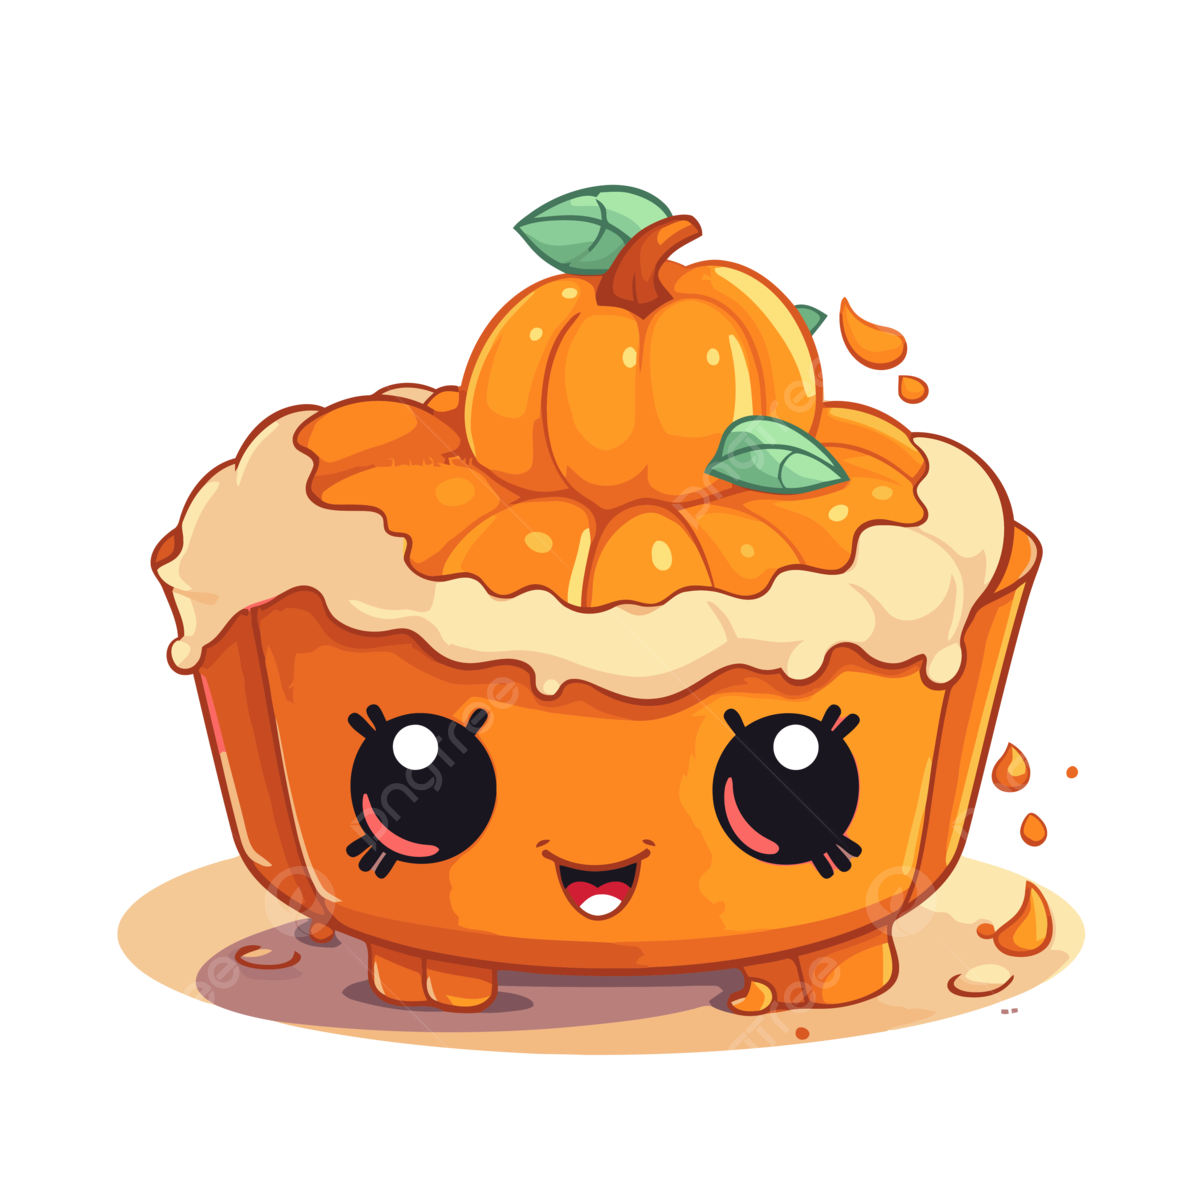 Cute Pumpkin PNG Clipart